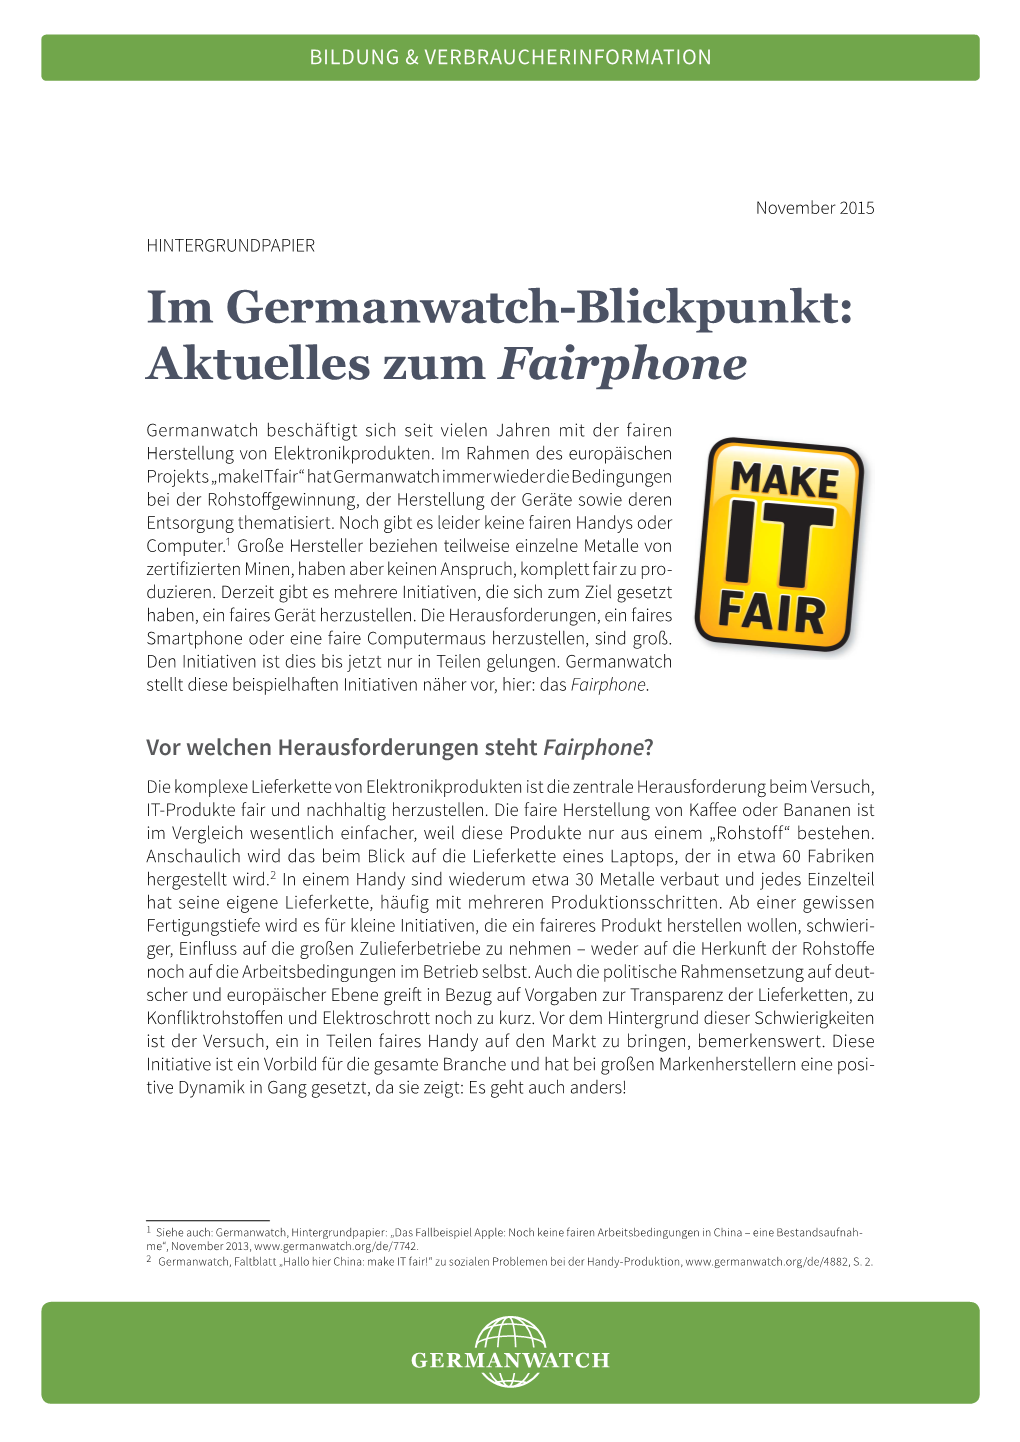 Im Germanwatch-Blickpunkt: Aktuelles Zum Fairphone, November 2015